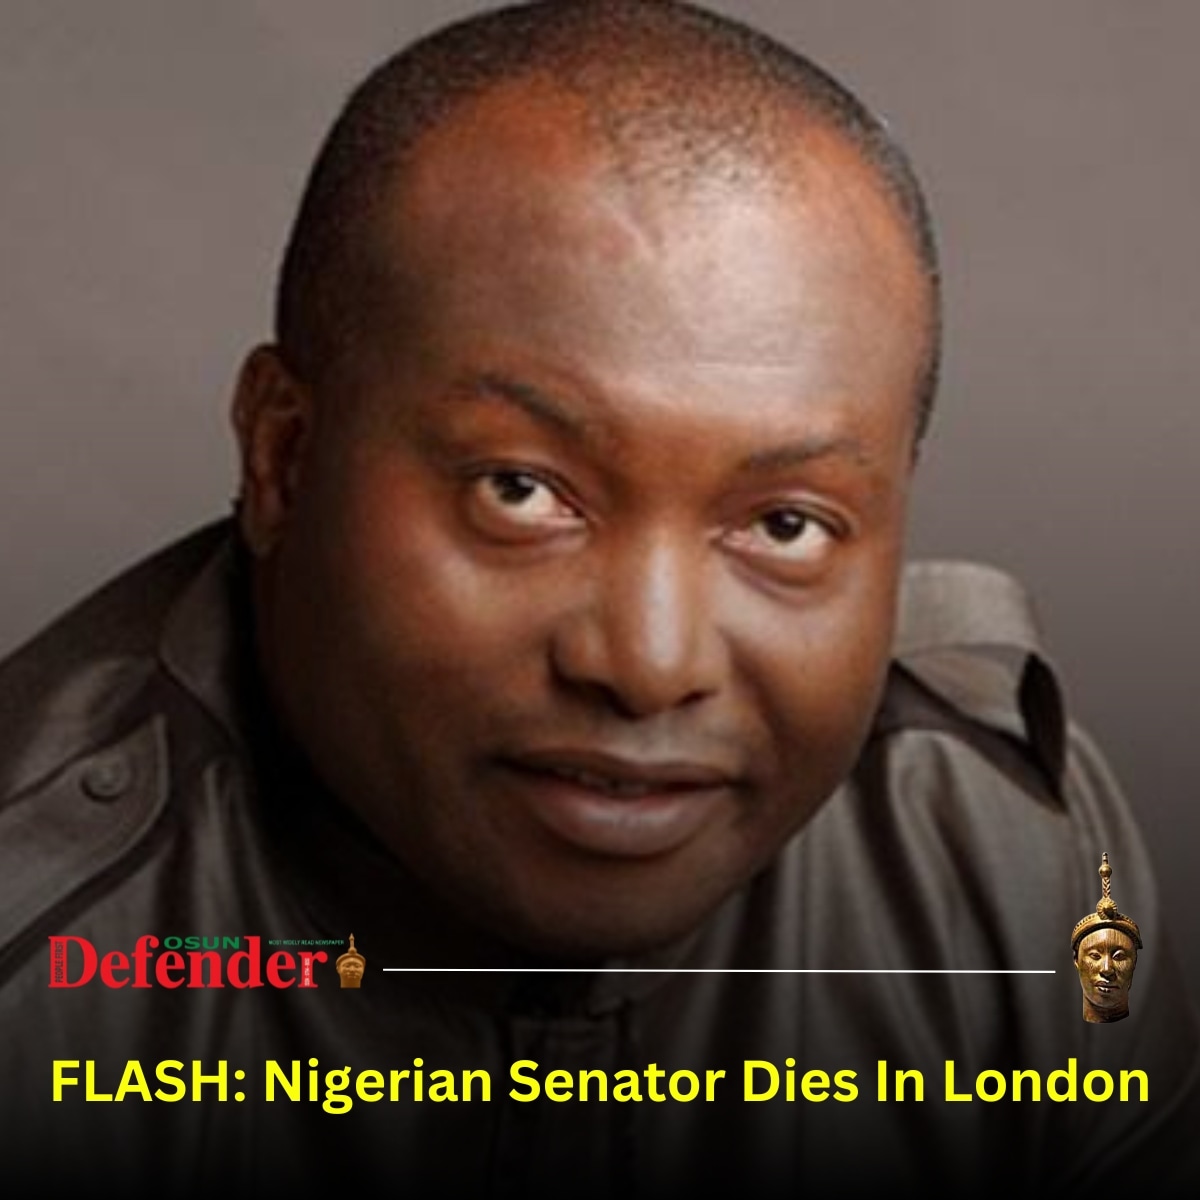 FLASH: Nigerian Senator Ifeanyi Ubah Dies In London